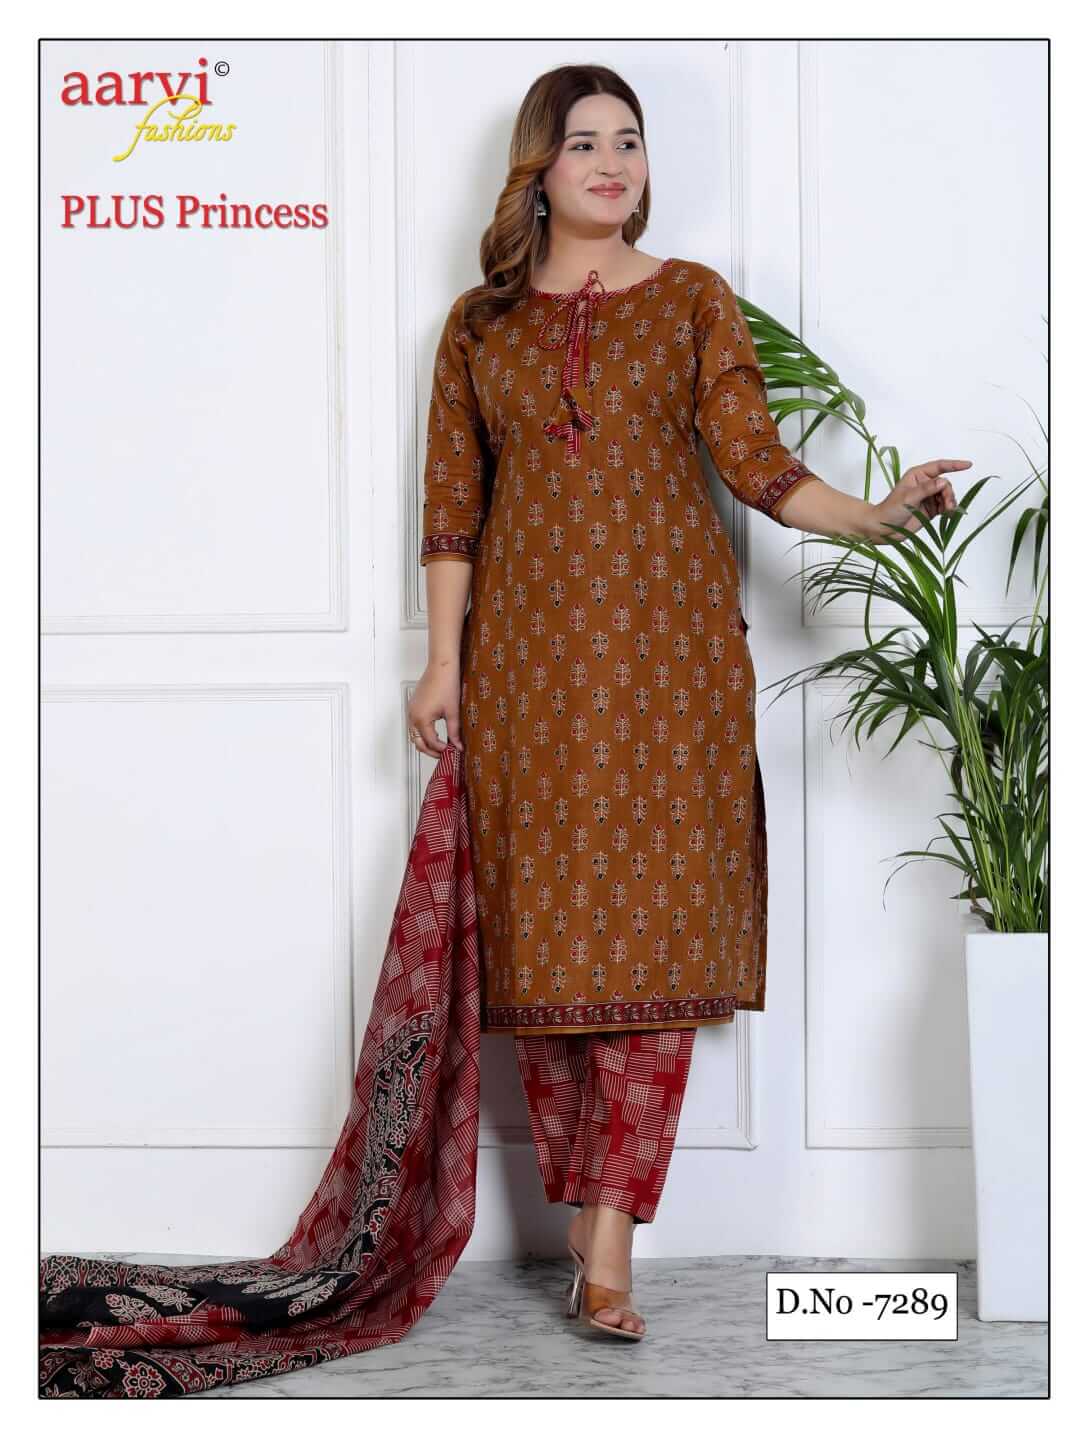 Aarvi Fashions Plus Princess Readymade Dress Catalog collection 7